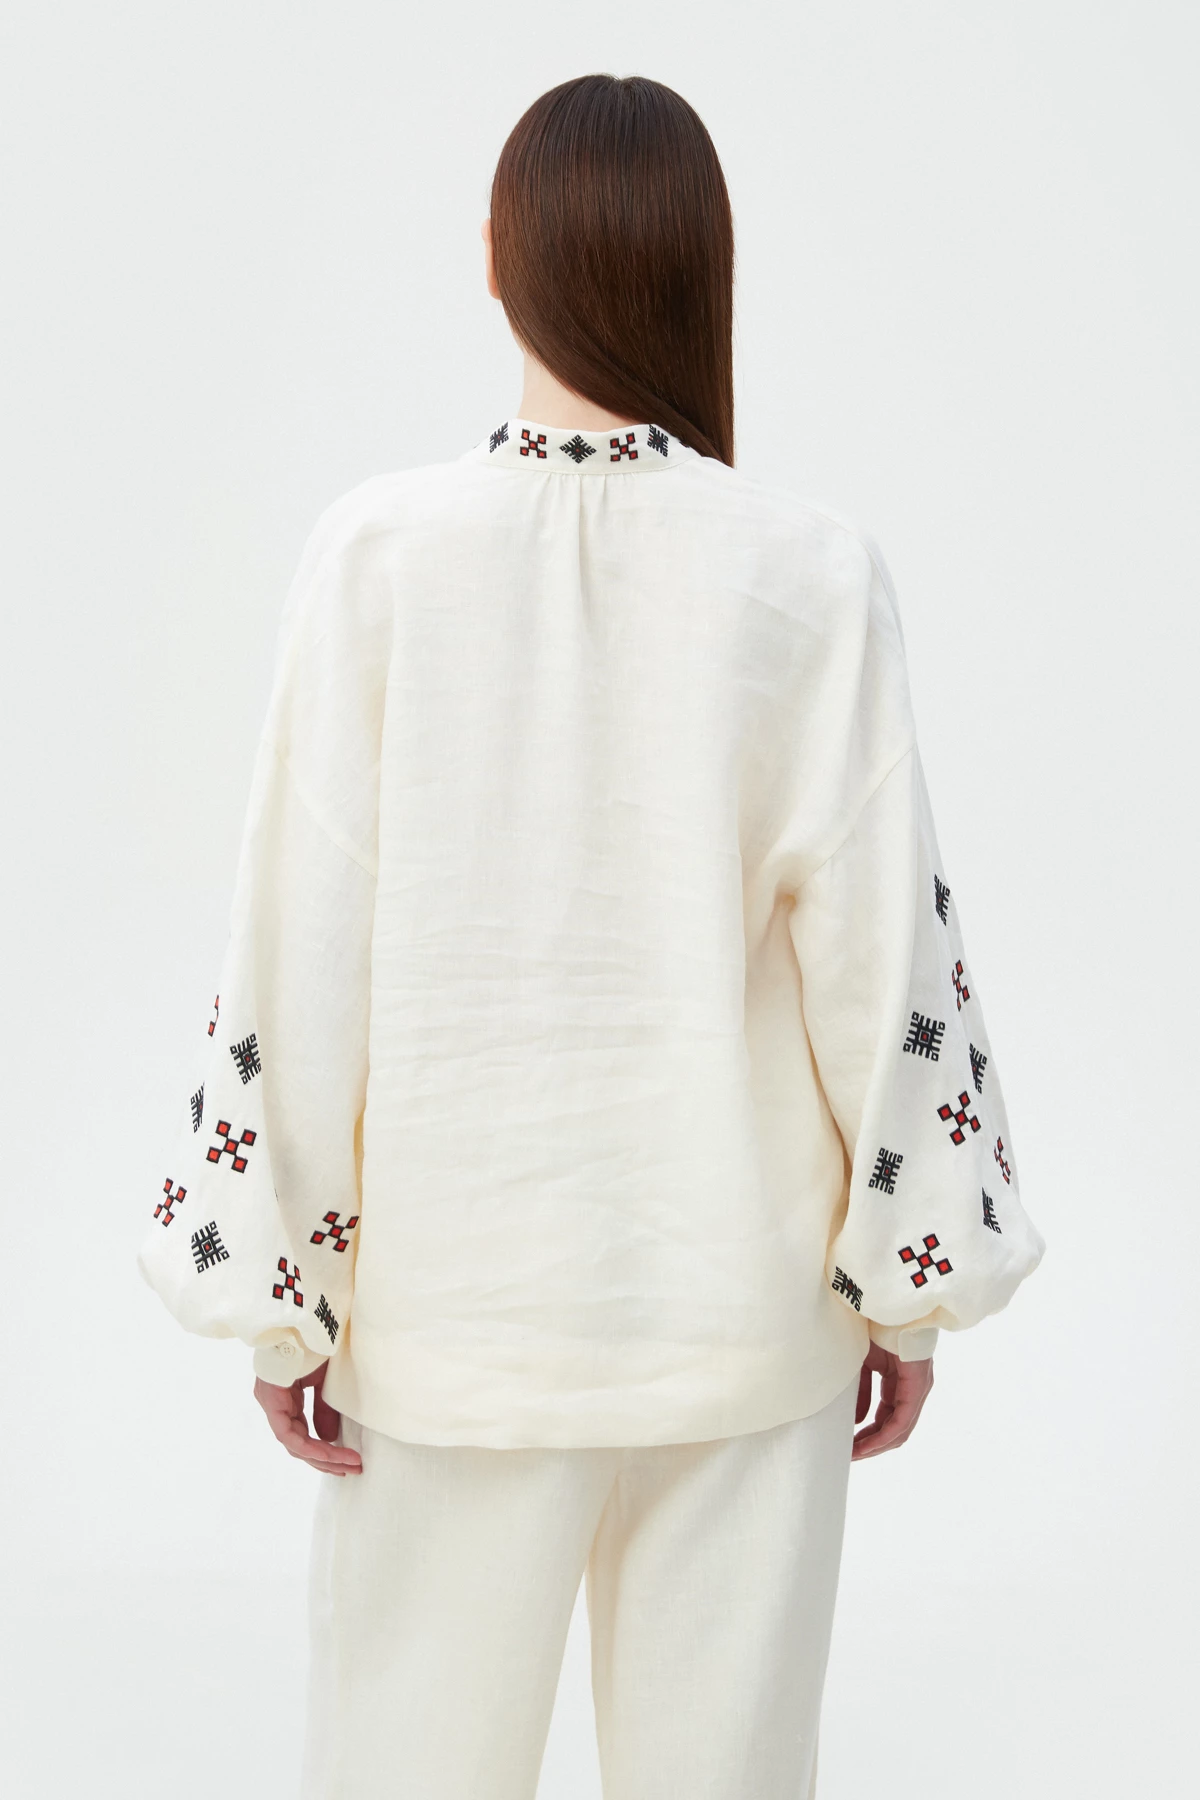 Milky linen vyshyvanka shirt with geometric embroidery, photo 4